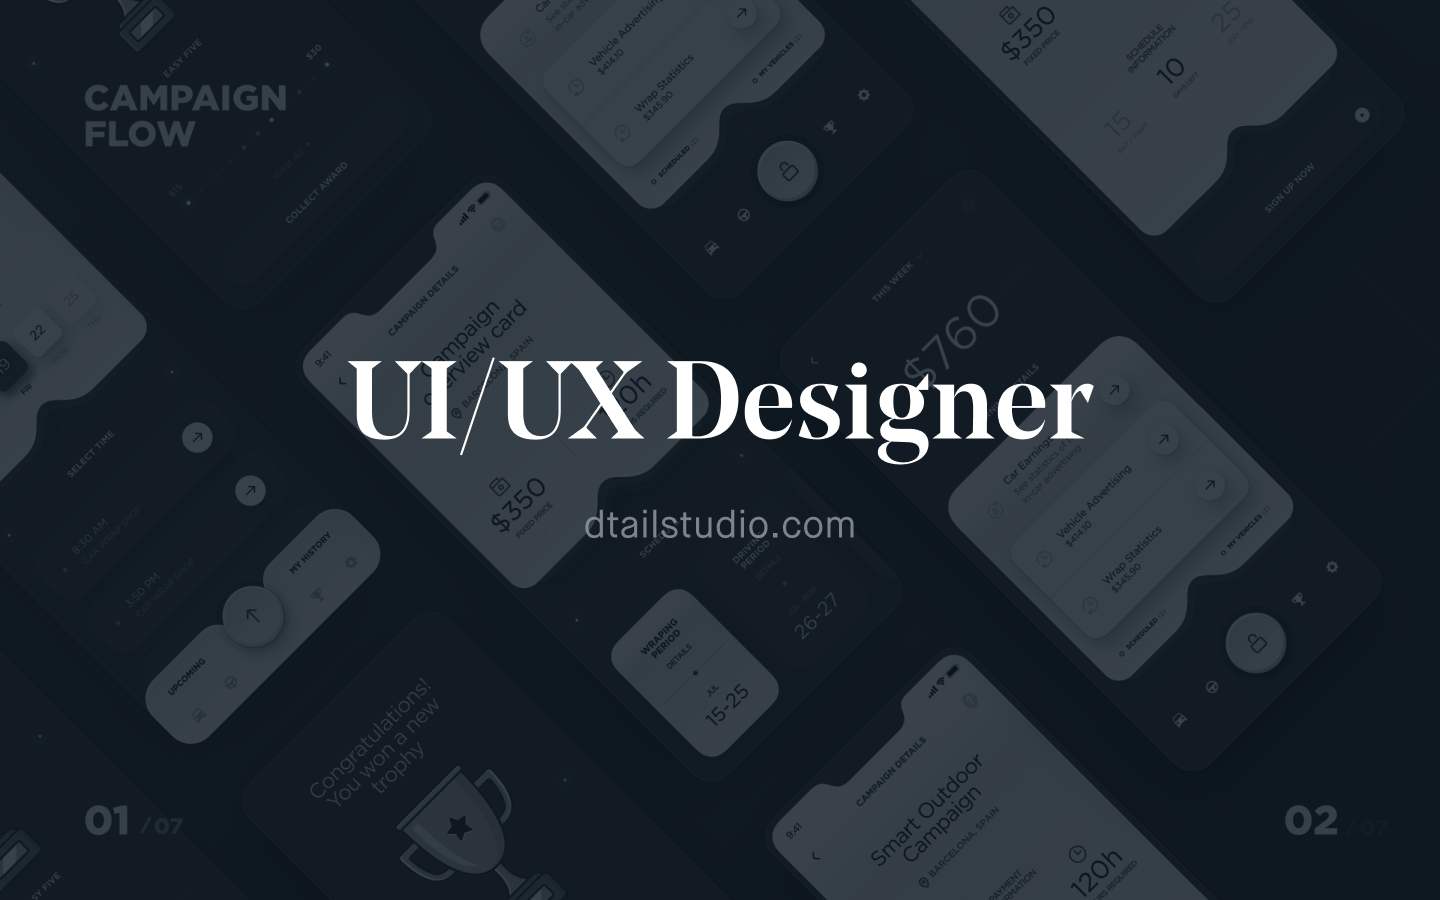 UI UX Designer At Dtail